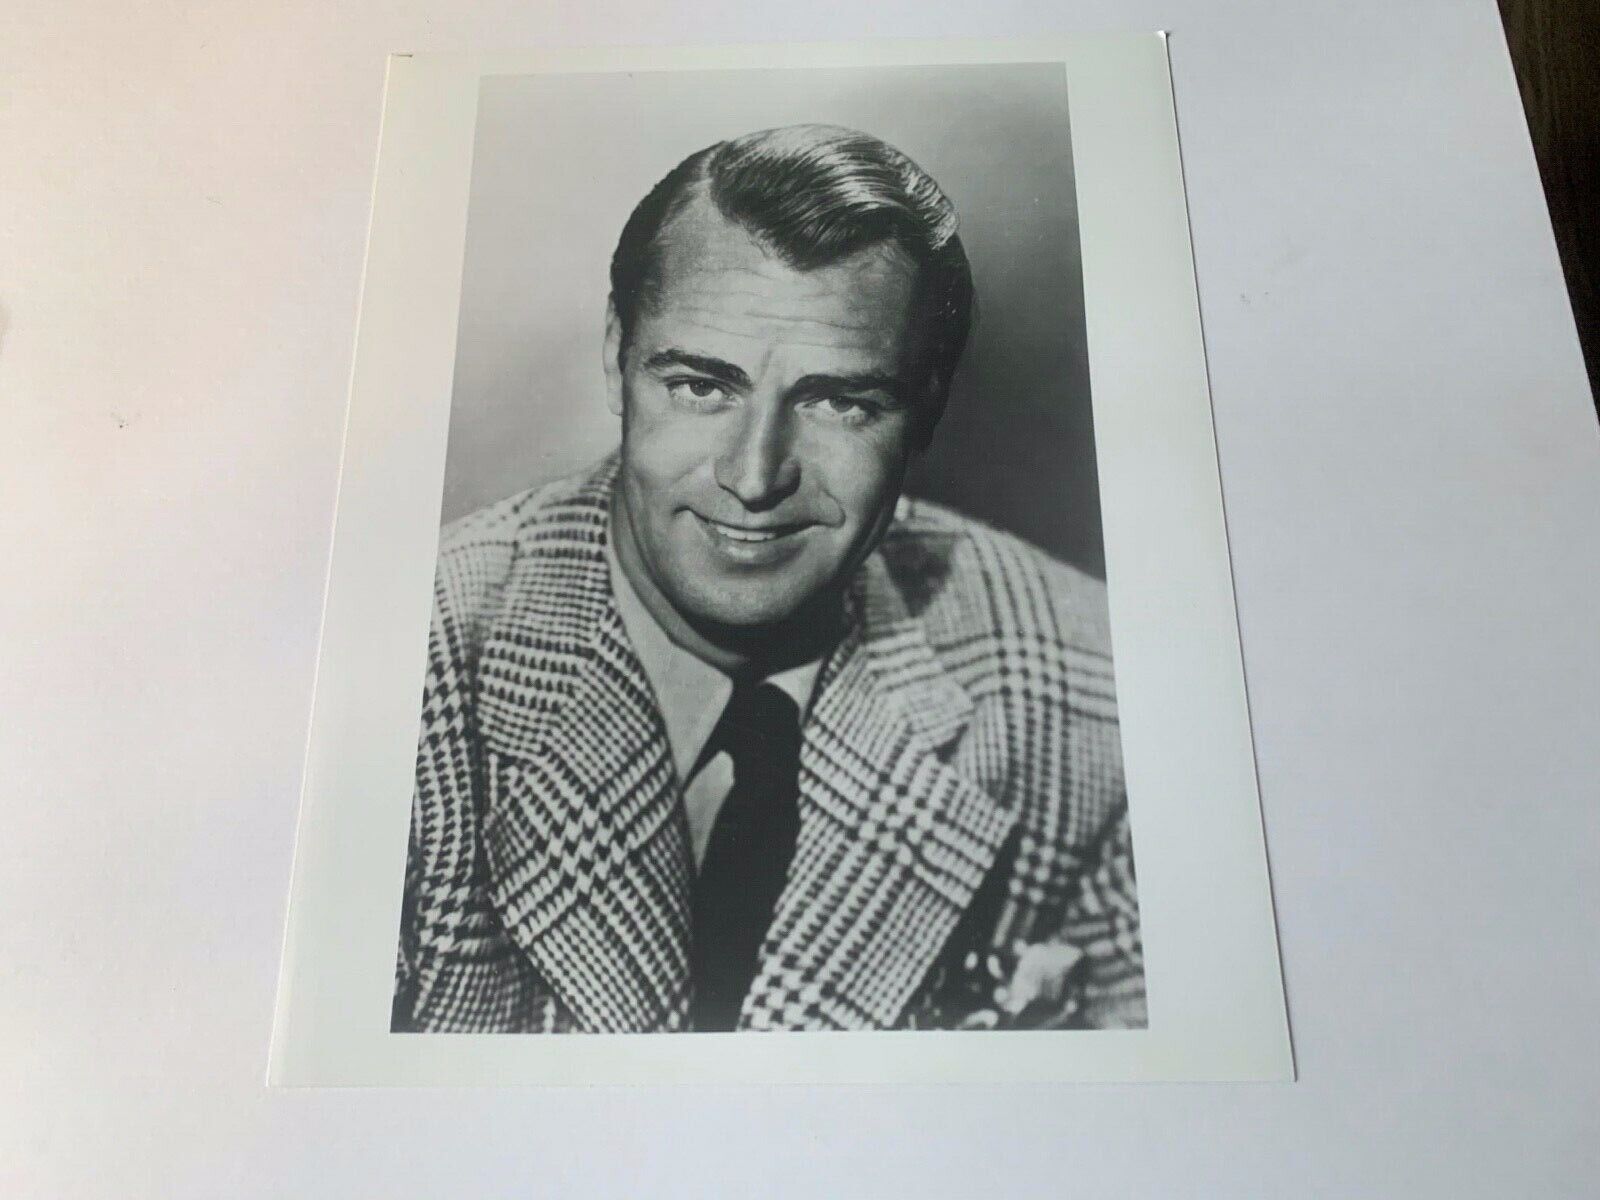 Alan Ladd Unsigned Vintage Publicity Photo Size 8x10 B&W Celebrity Photo